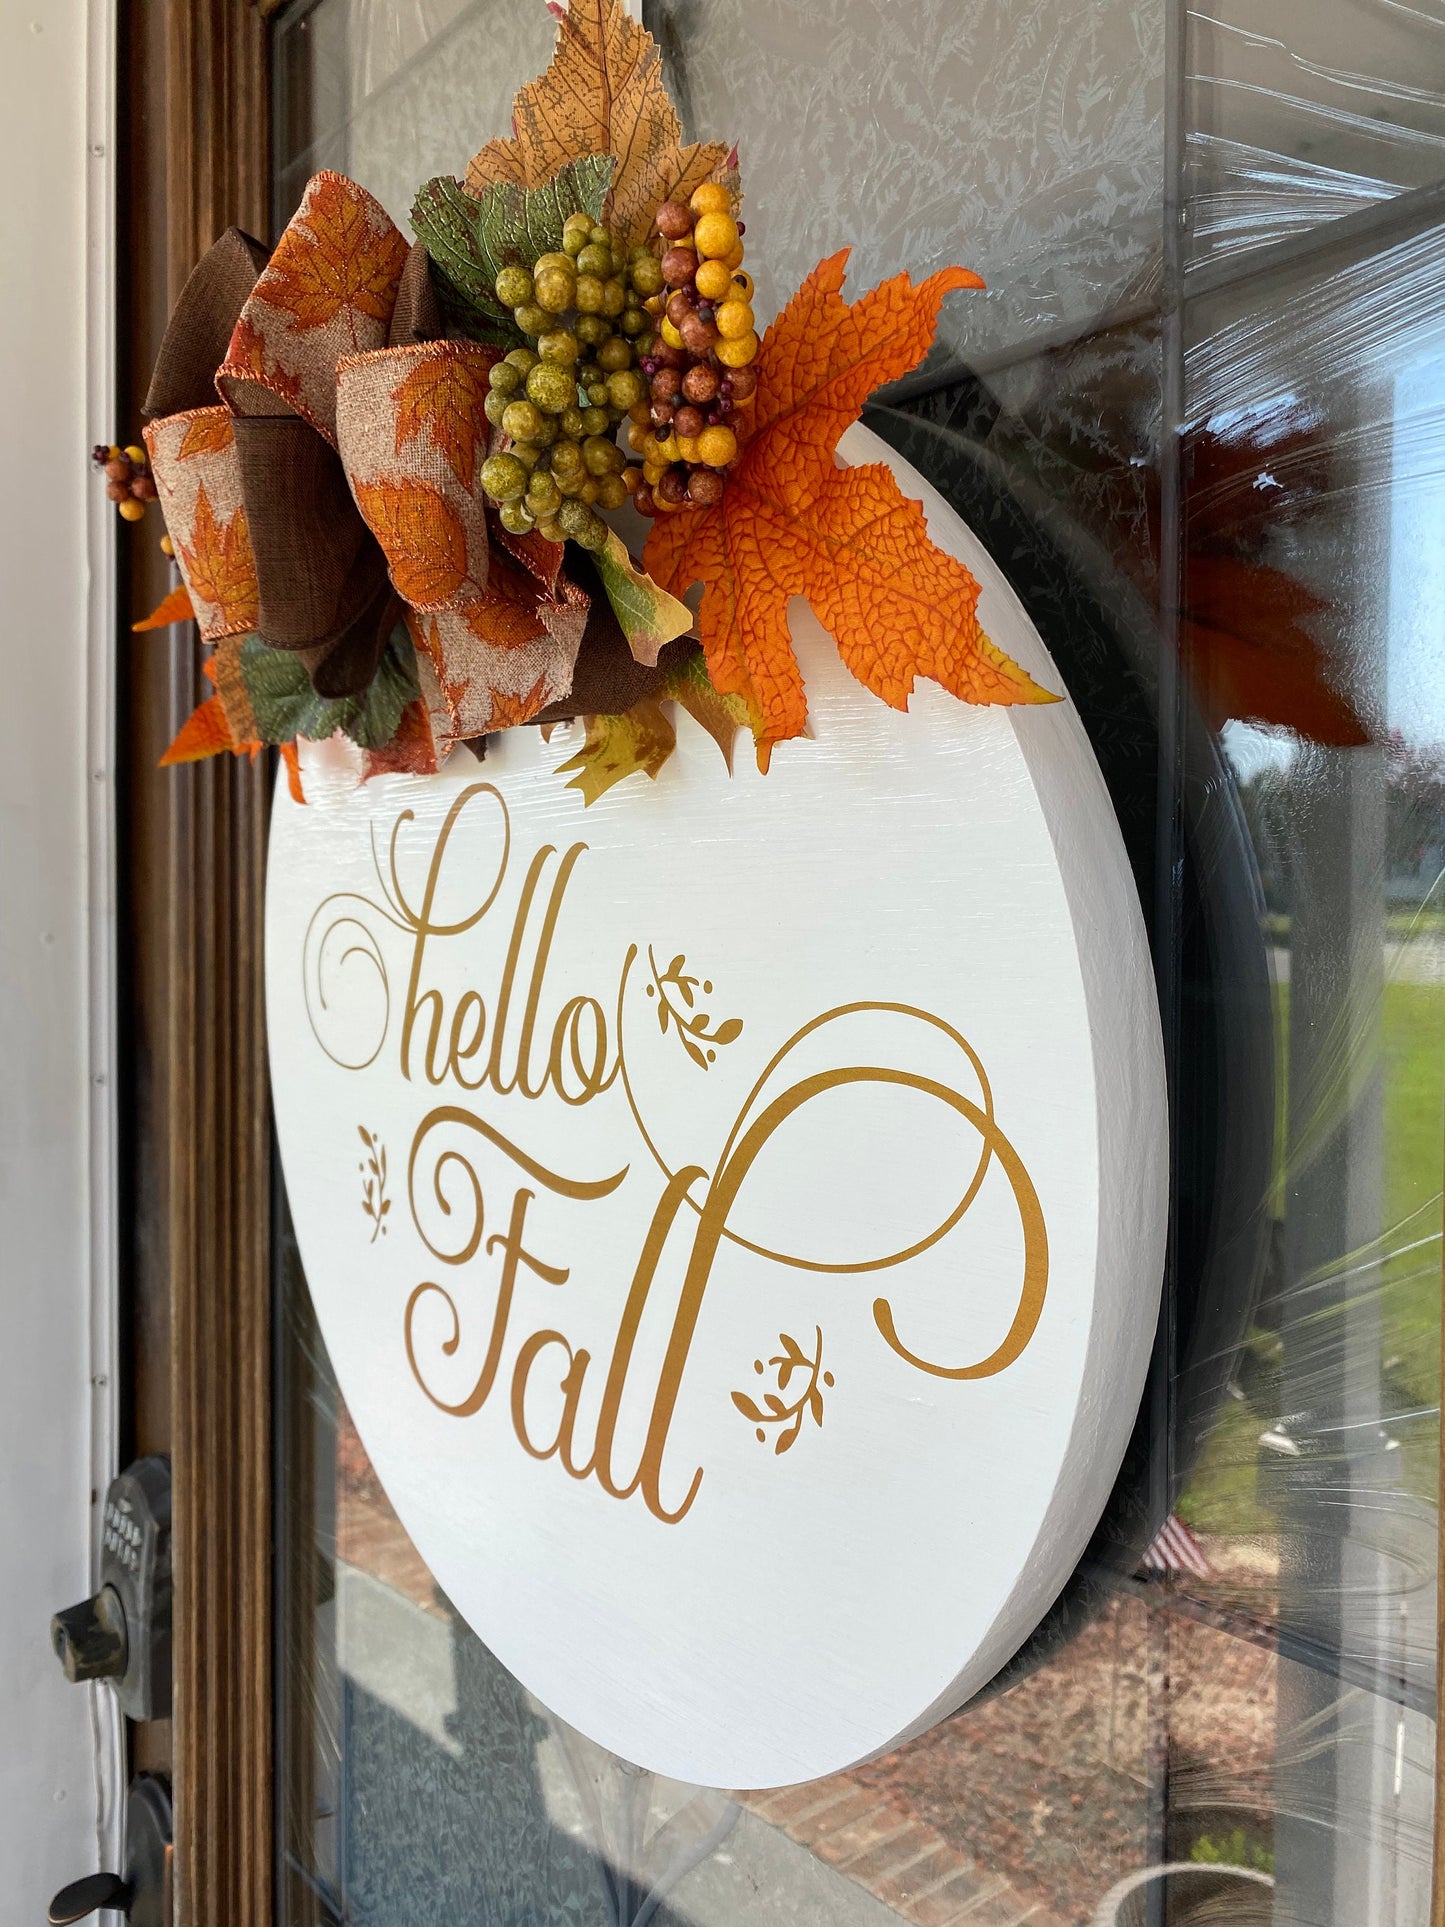 Hello Fall Sign